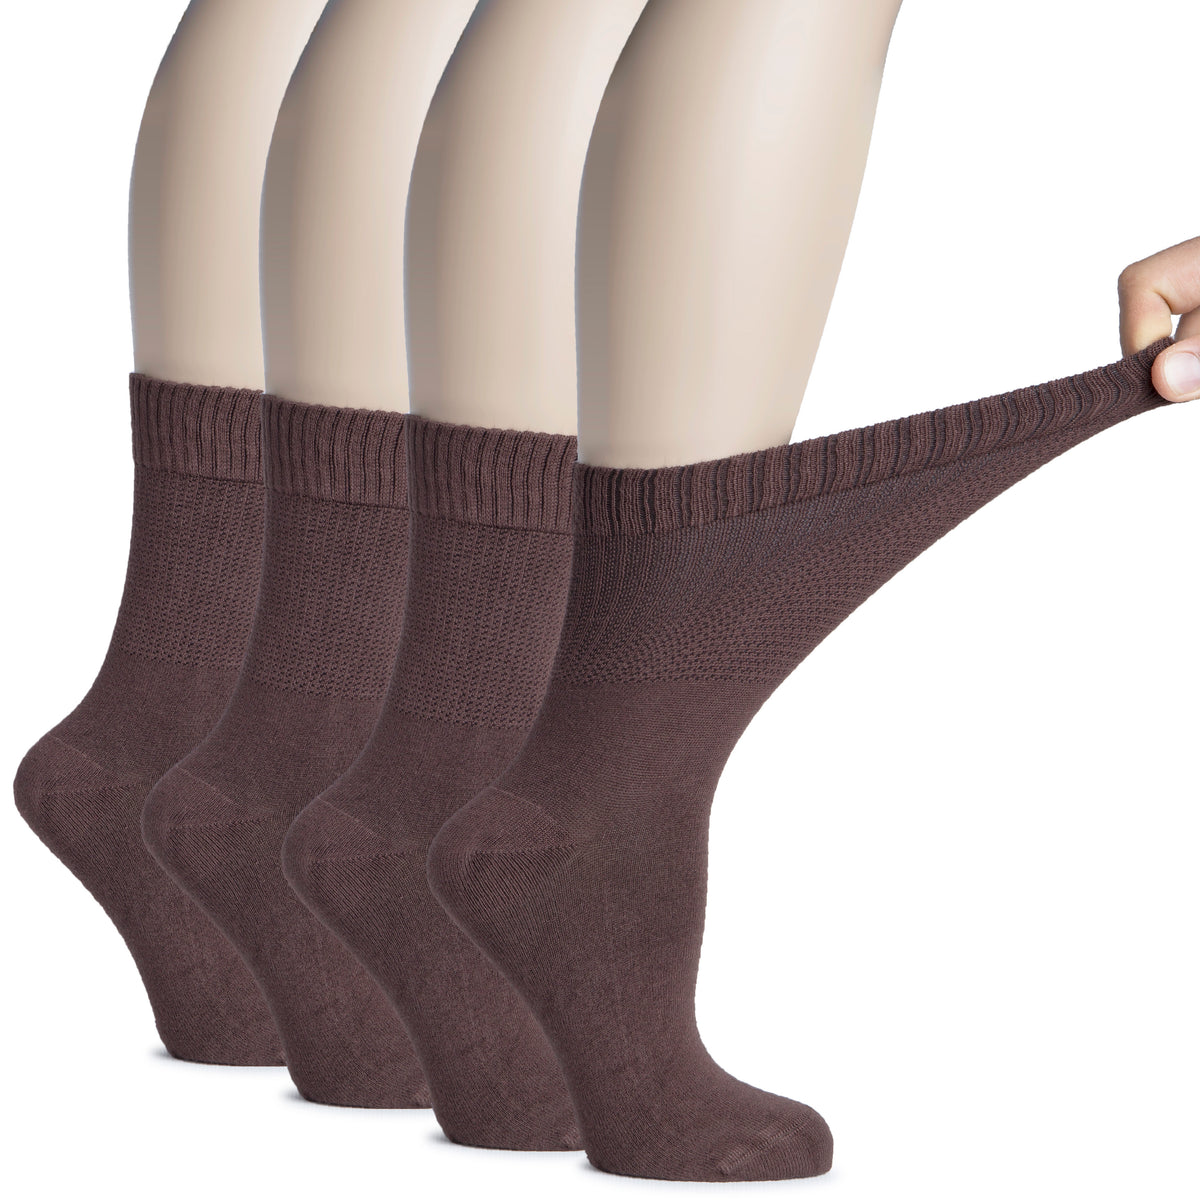 Hugh Ugoli Women's Bamboo Diabetic Crew Thin Socks With Seamless Toe, Soft Socks For Pregnant Women & Elderly People, 4 Pairs | Shoe Size: 6-9 | Black